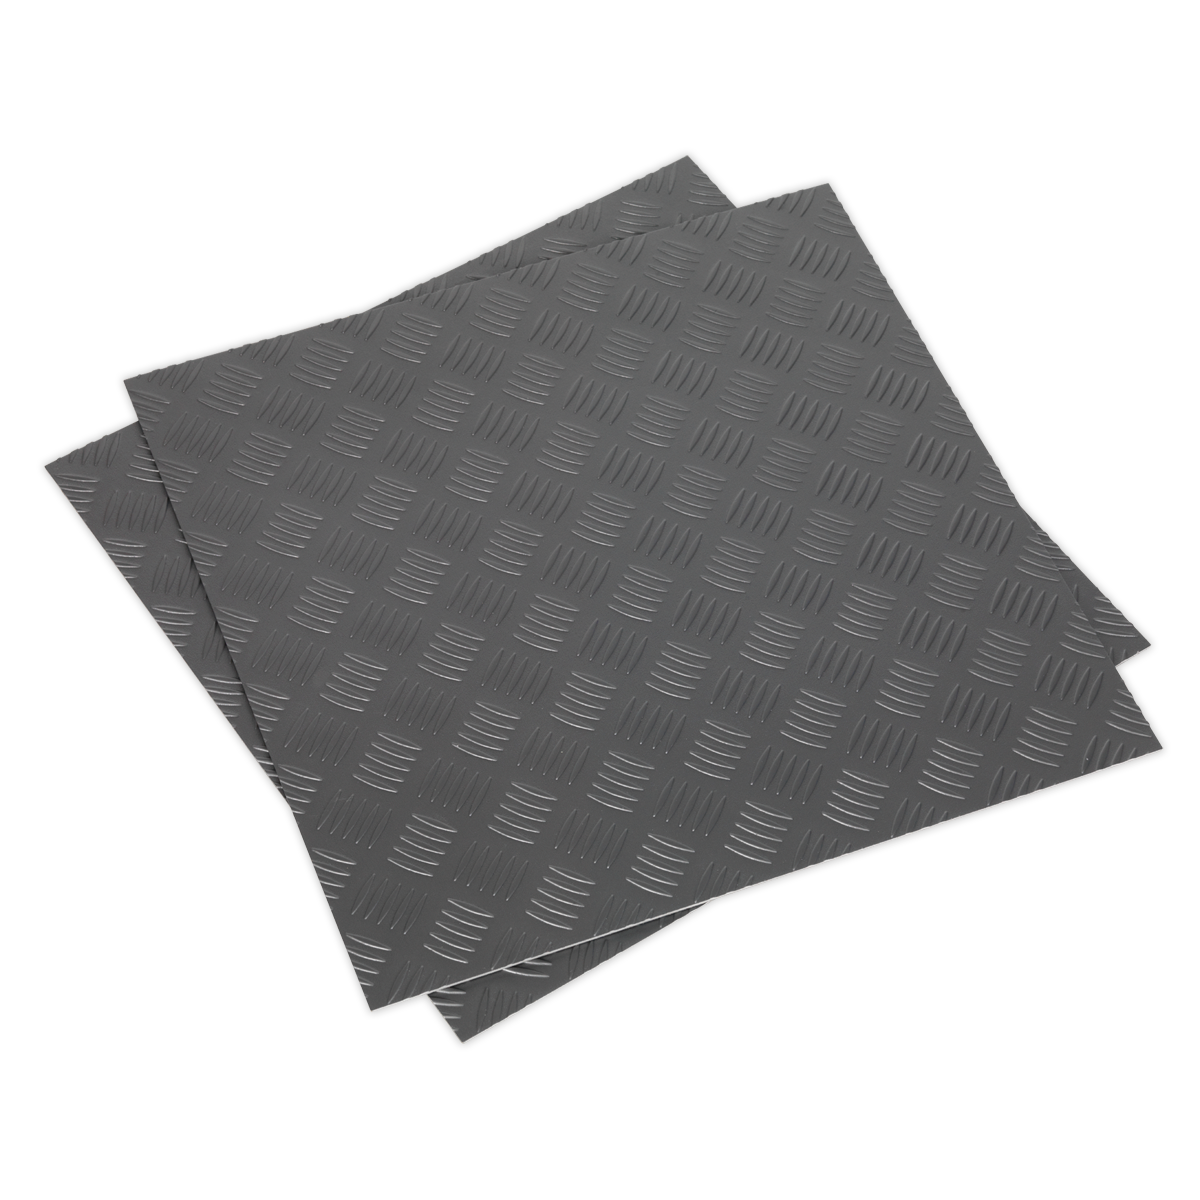 Sealey Vinyl Floor Tile with Peel & Stick Backing - Silver Treadplate Pack of 16